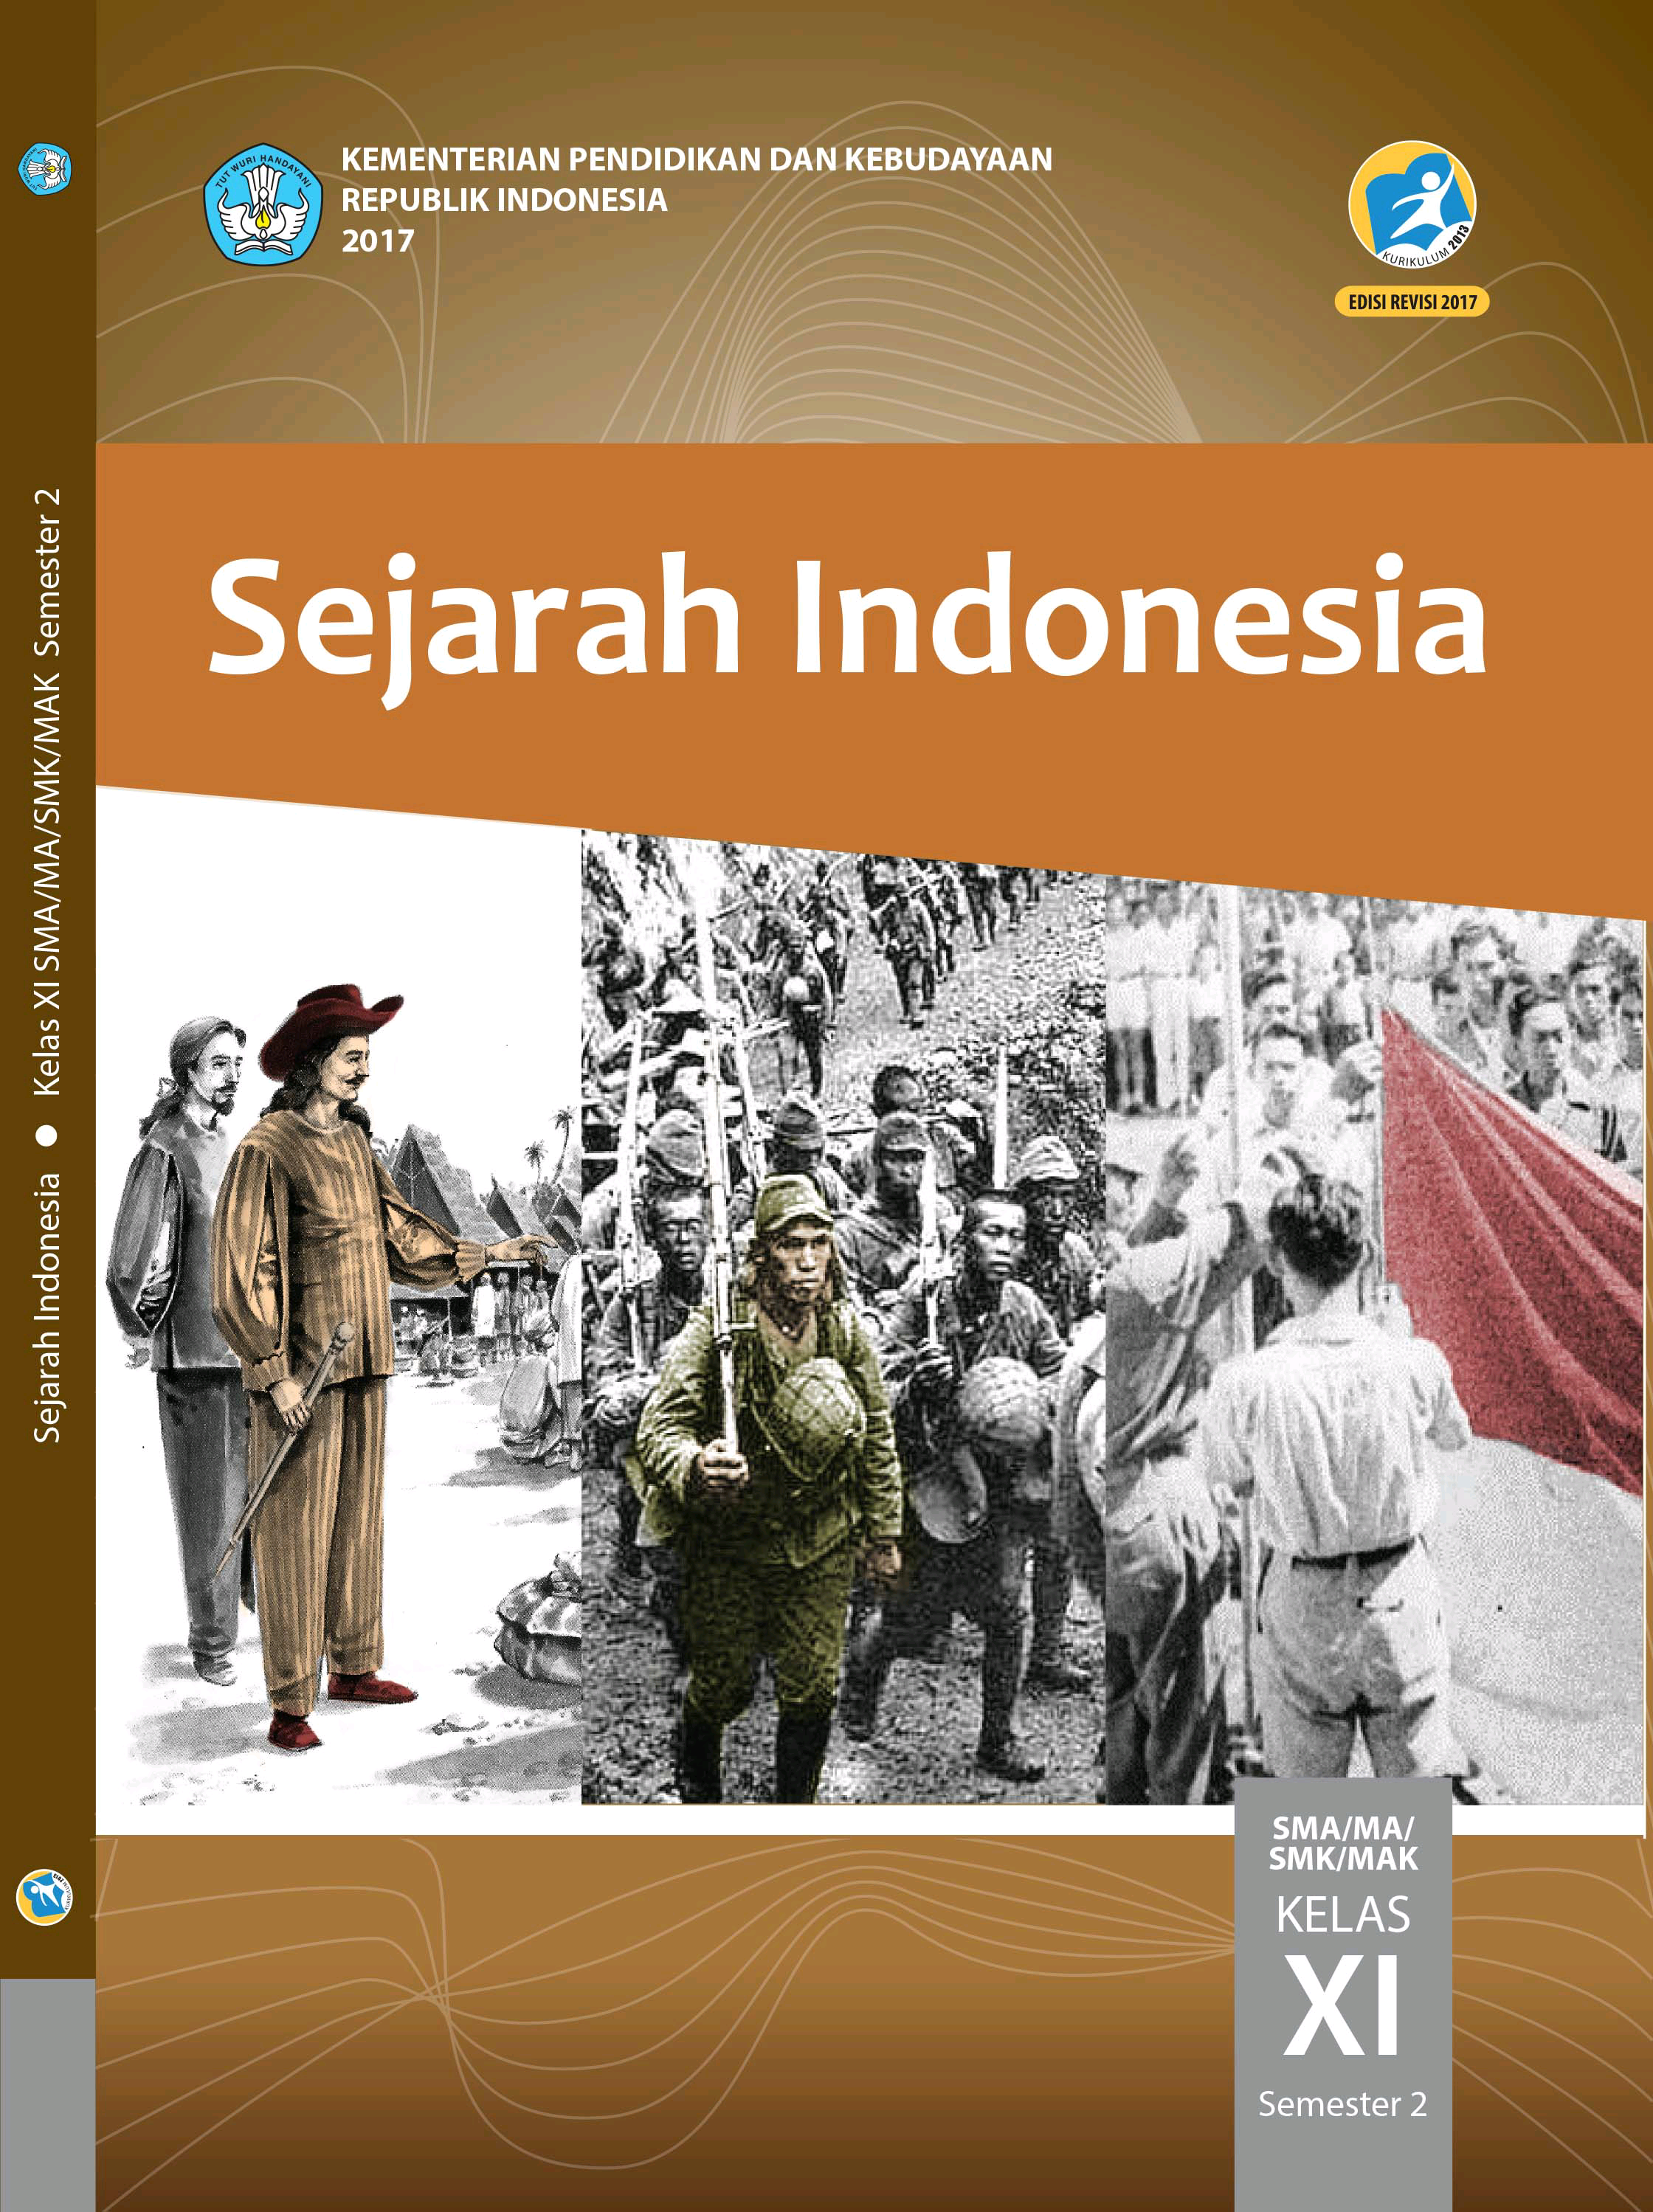 download rpp sejarah indonesia kurikulum 2013